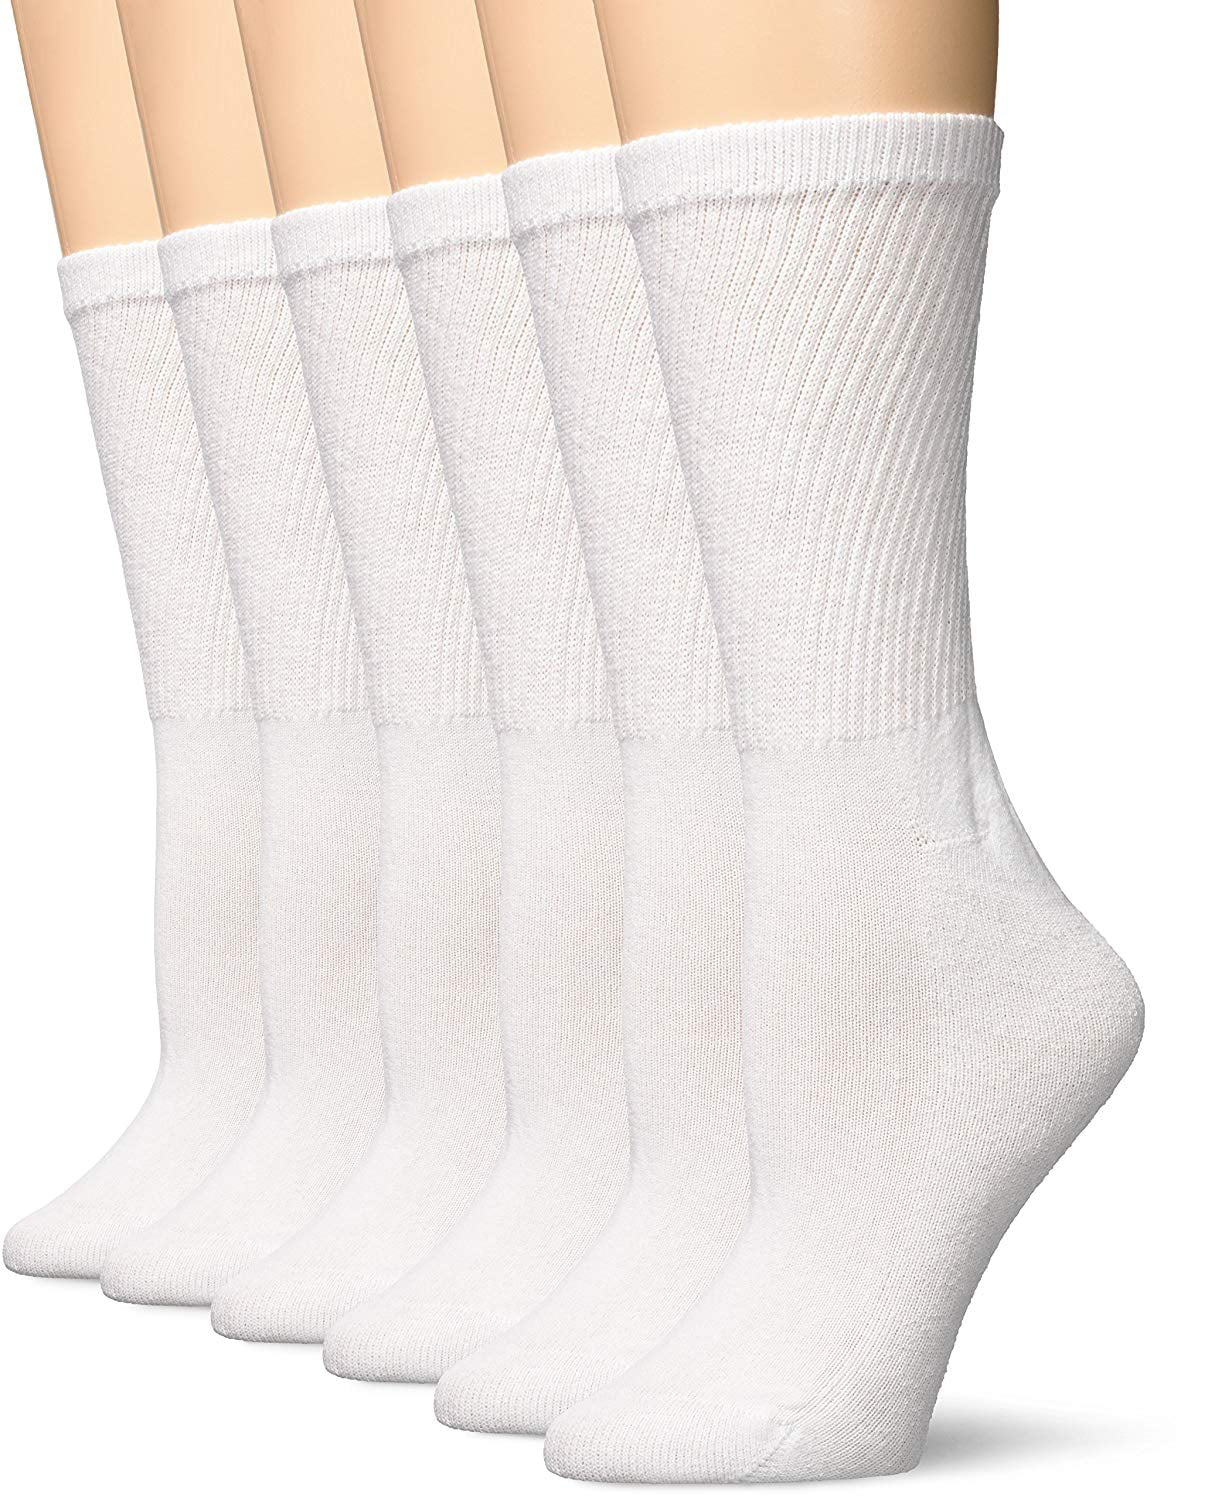 Hanes - Women's Comfort Blend Crew Sock, White, Shoe size 5-9/Sock Size ...